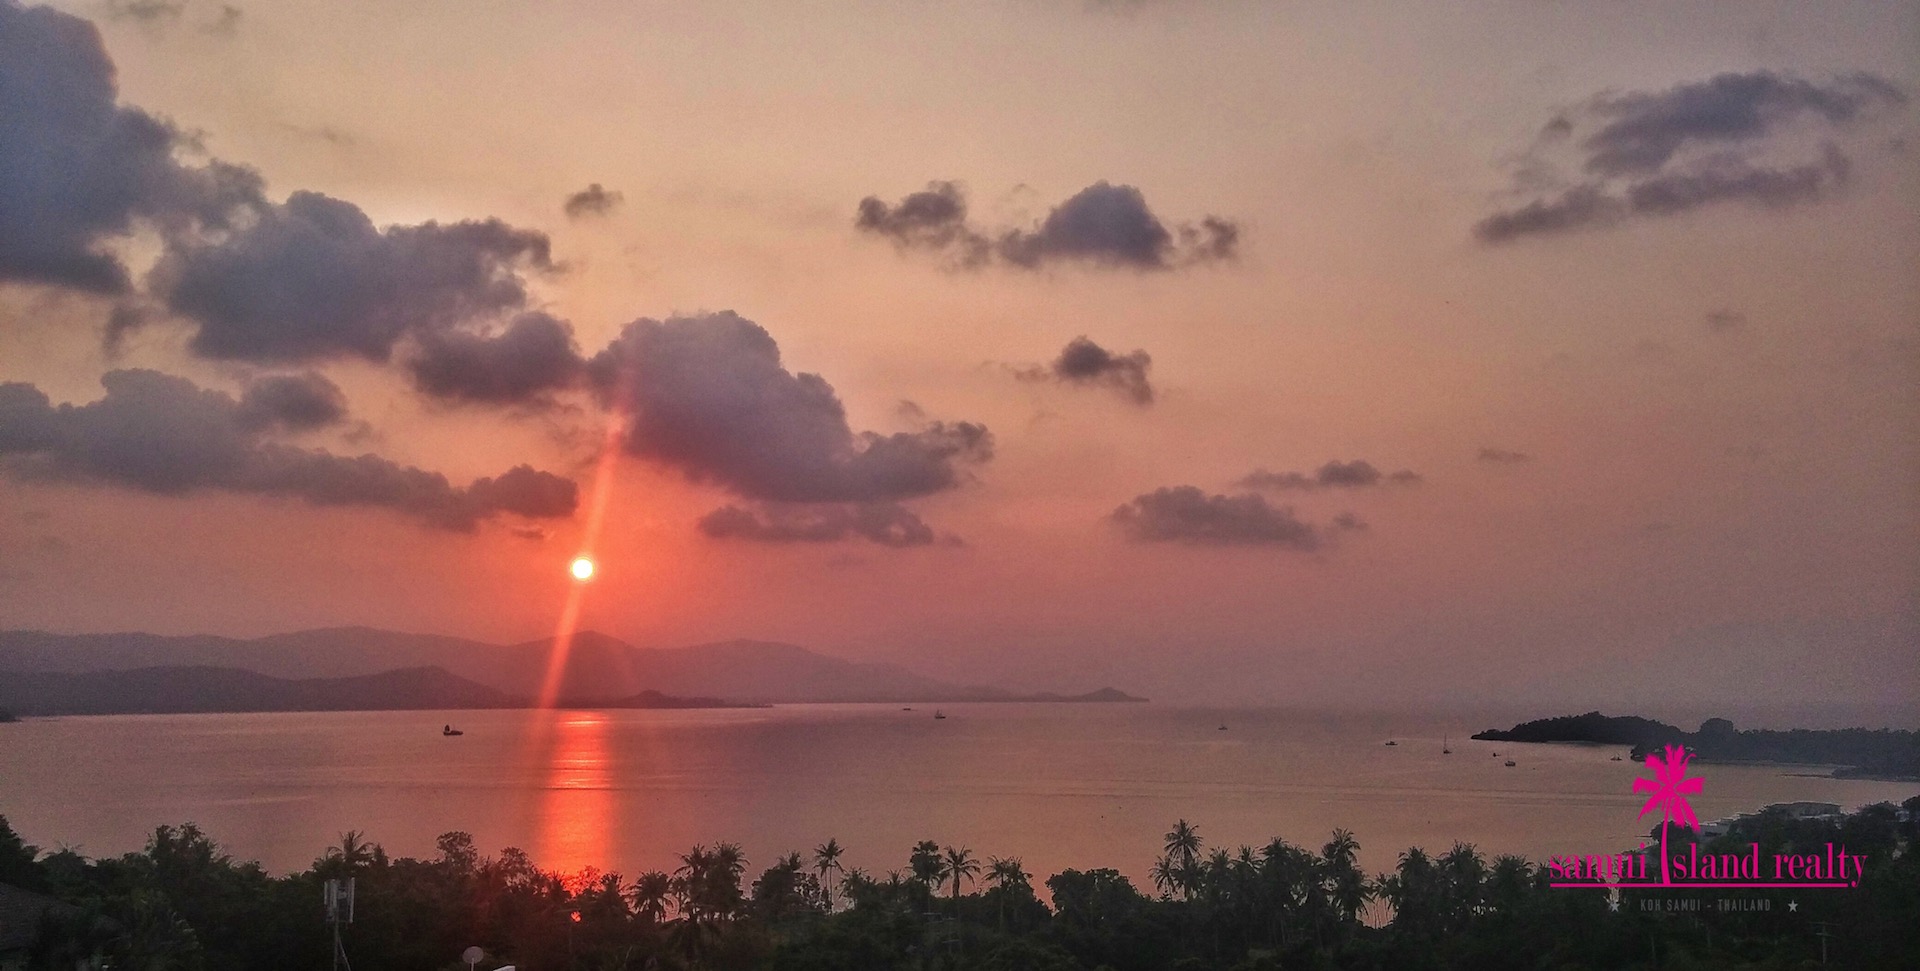 Koh Samui Sea View Development Land For Sale Sunset View